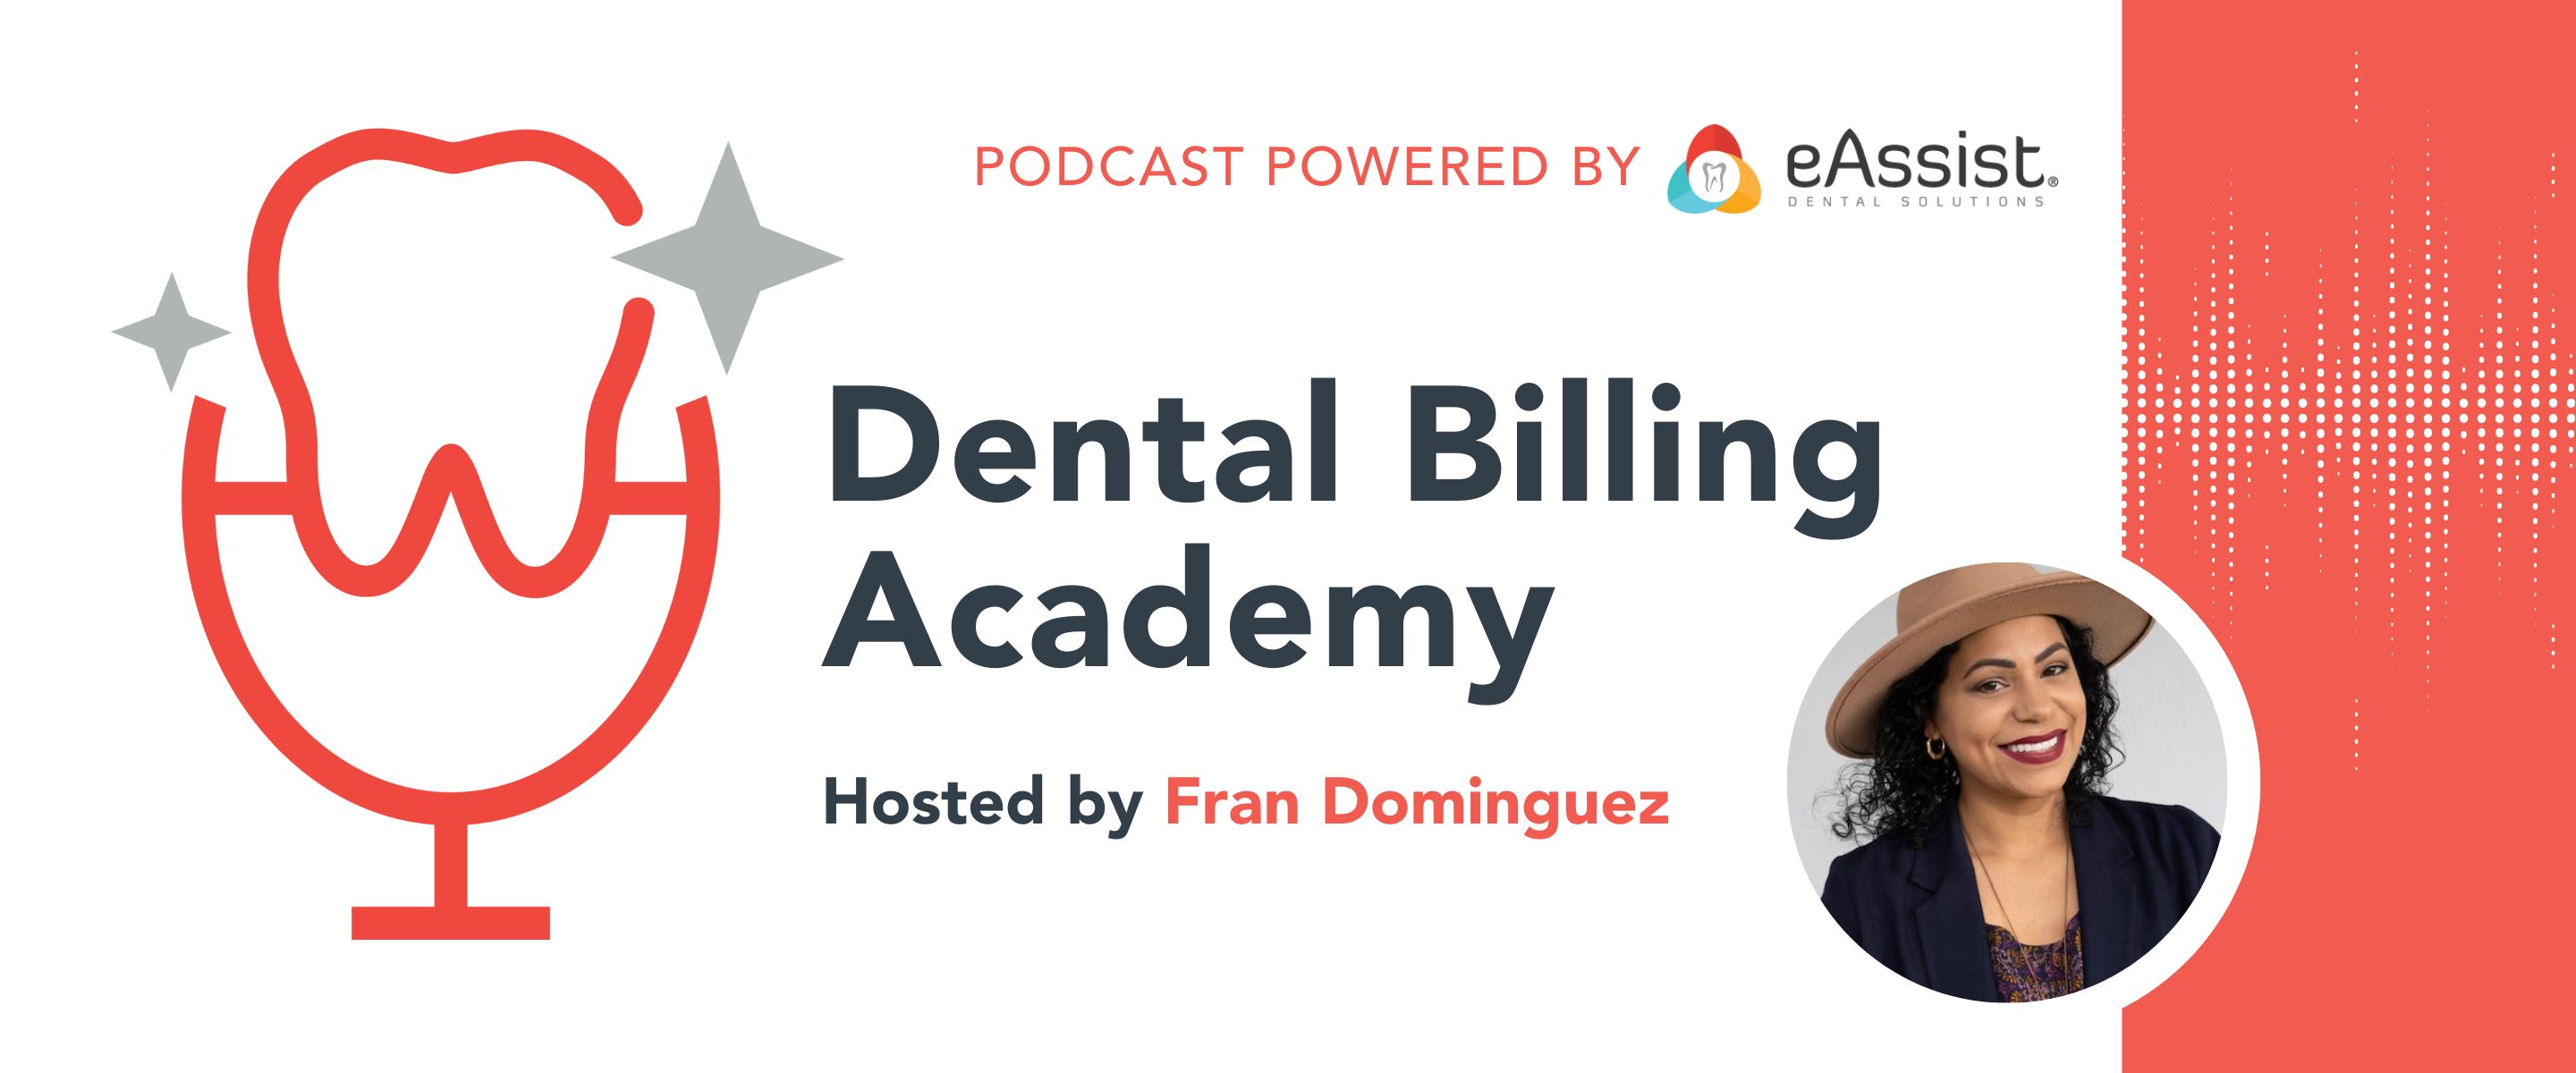 eAssist Welcomes Francheska Dominguez as New Host of Dental Billing Academy Podcast